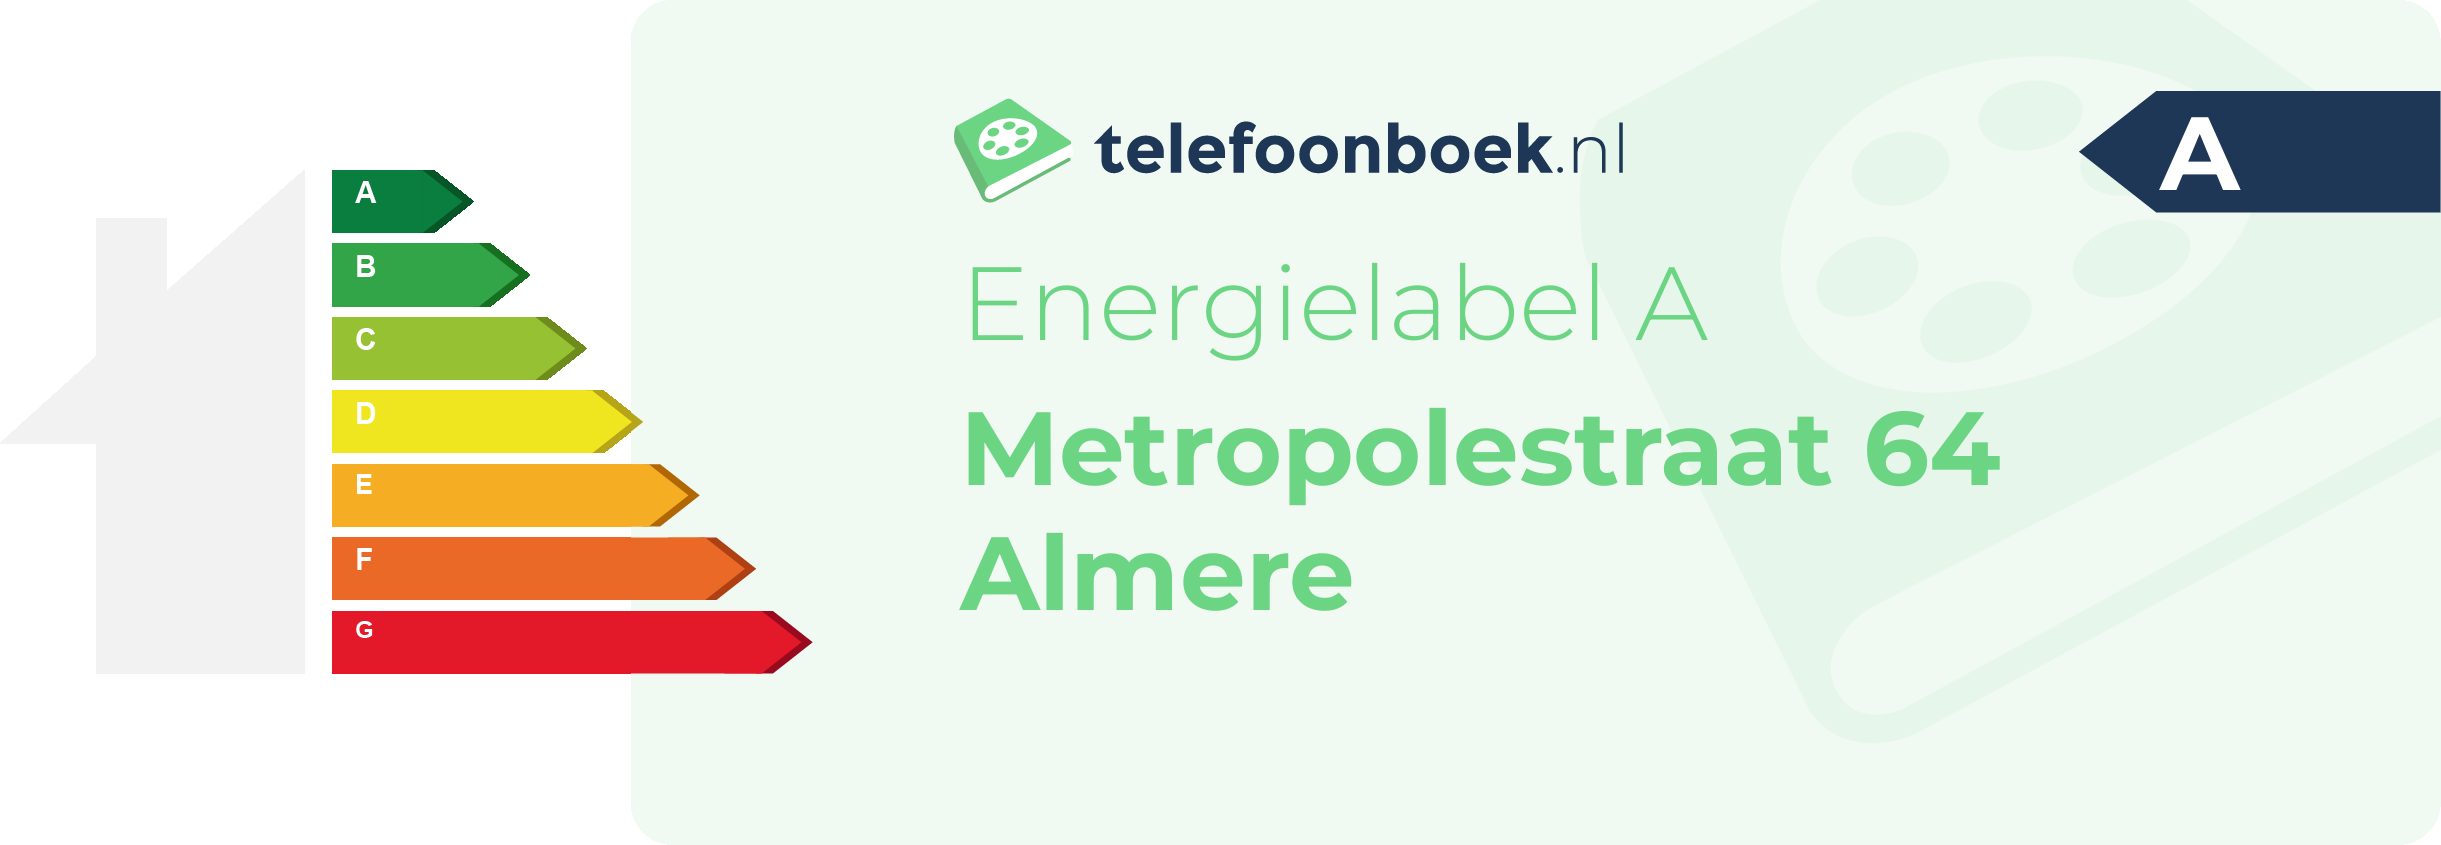 Energielabel Metropolestraat 64 Almere